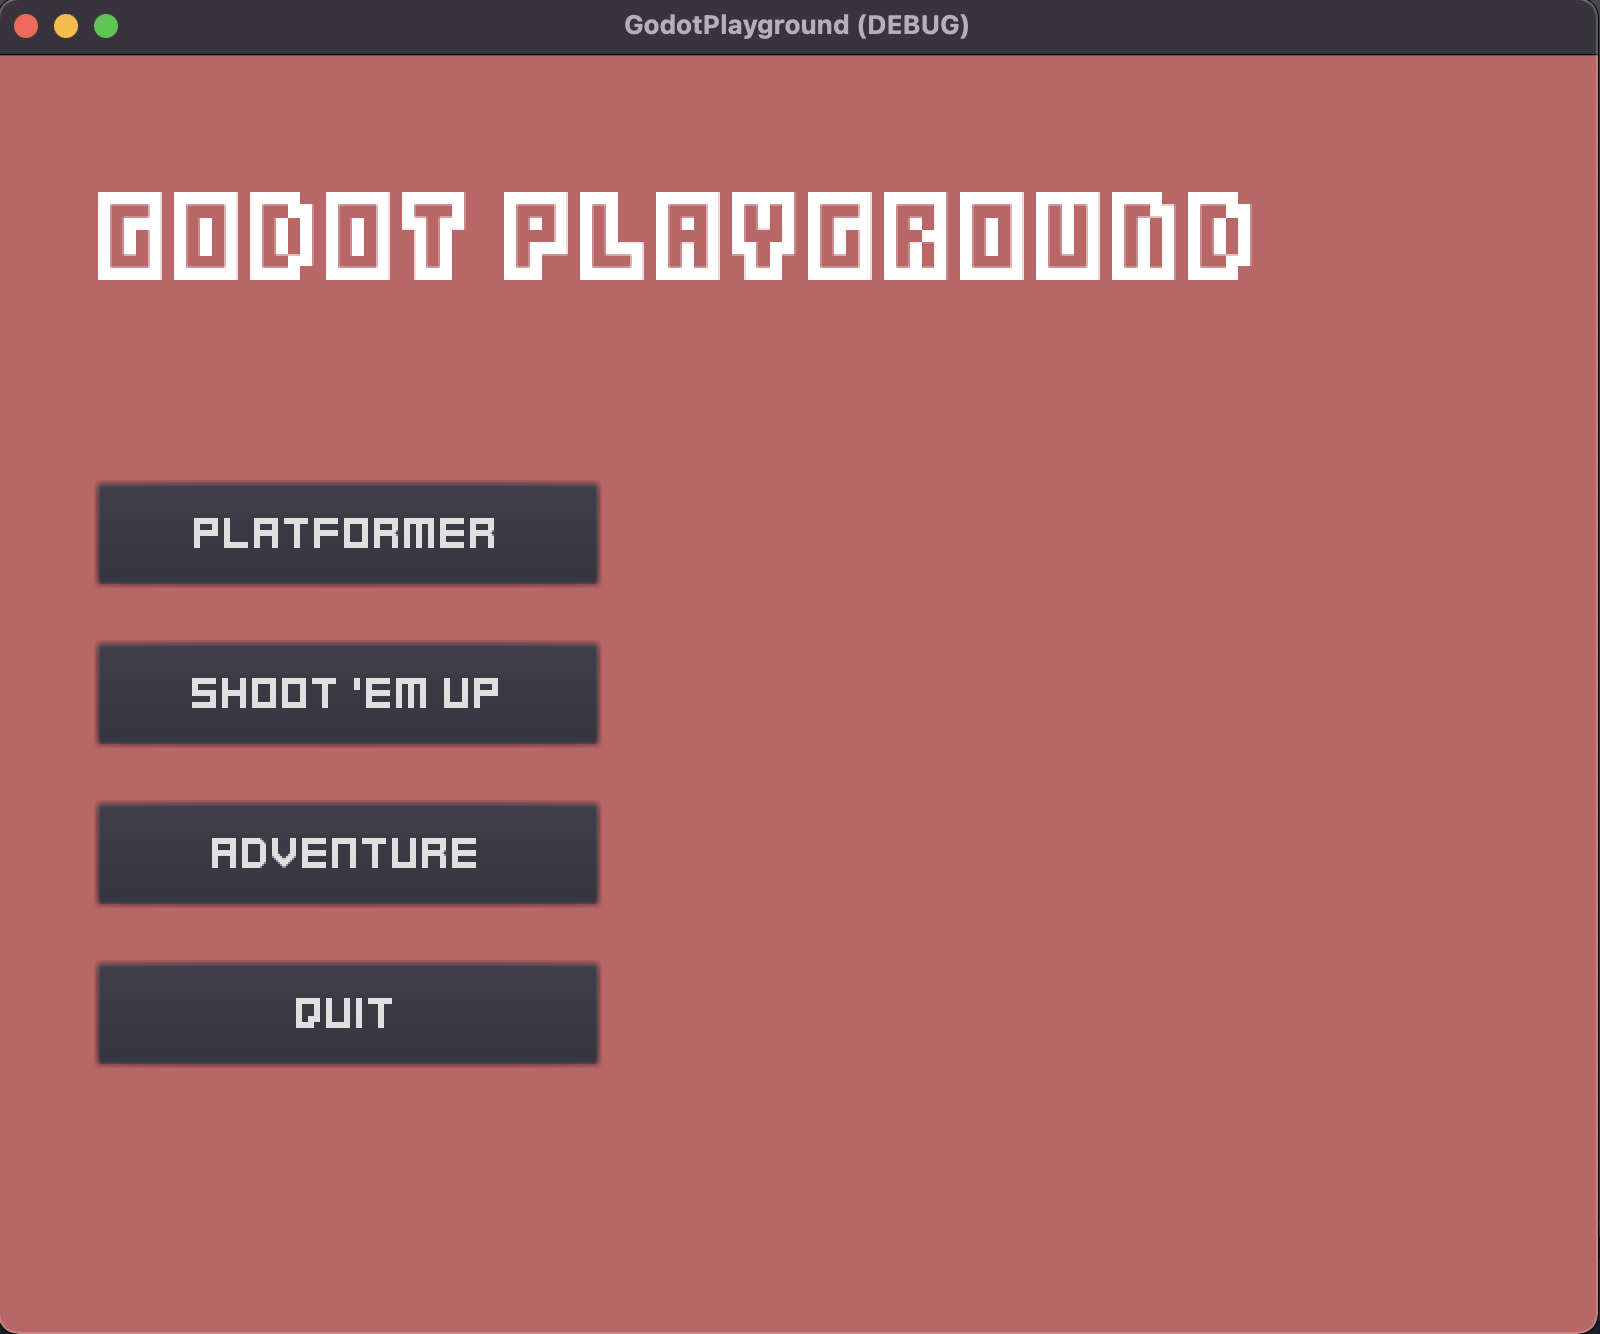 Menu/title screen of Godot demo project